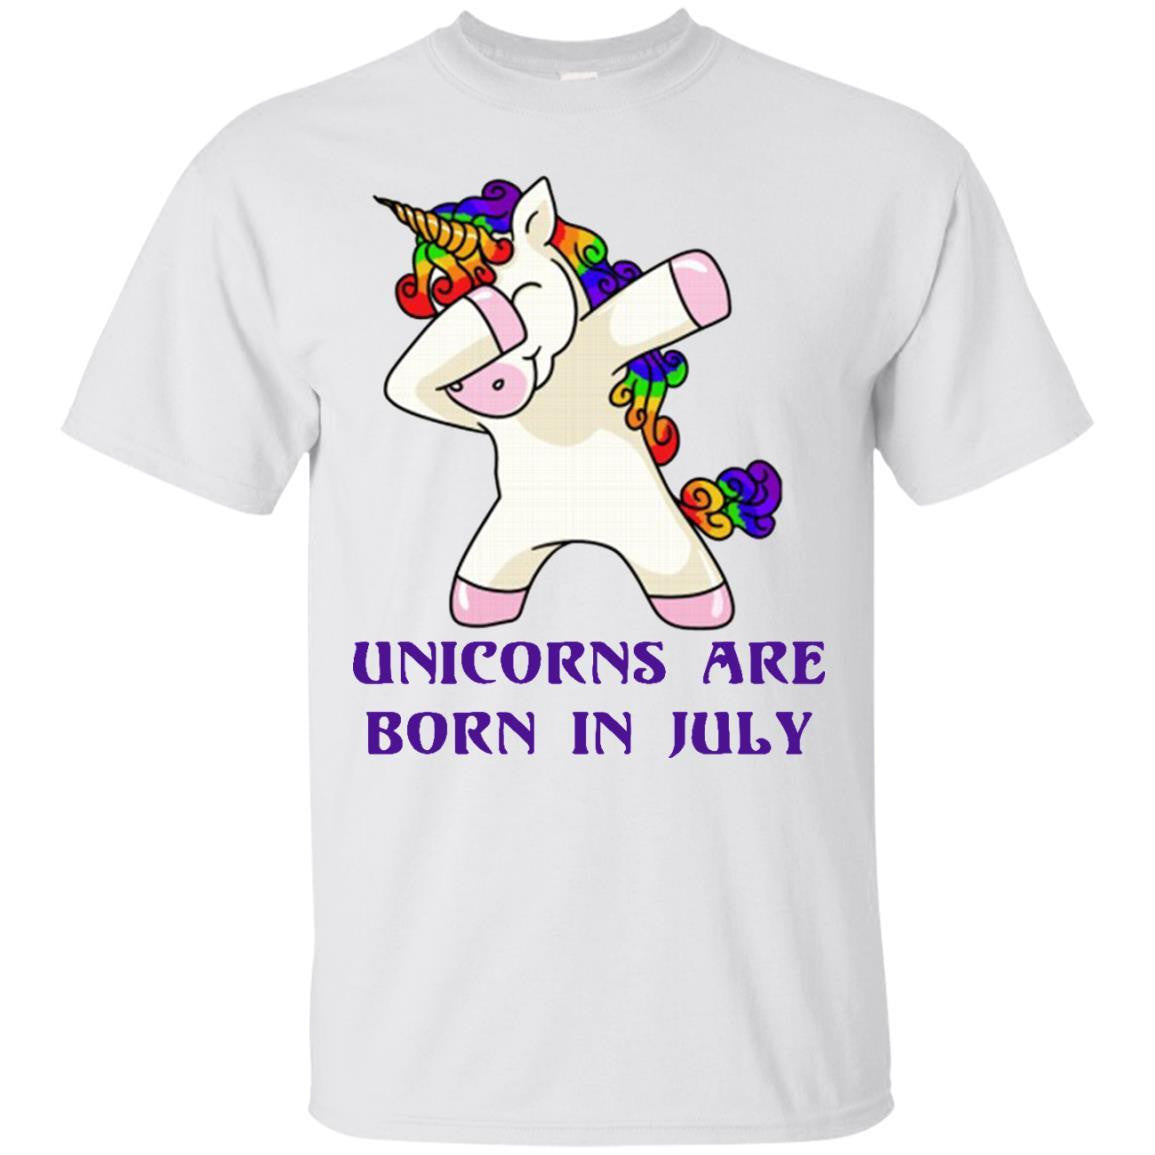 Dabbing Unicorns are Born in July shirt, tank top, racerback